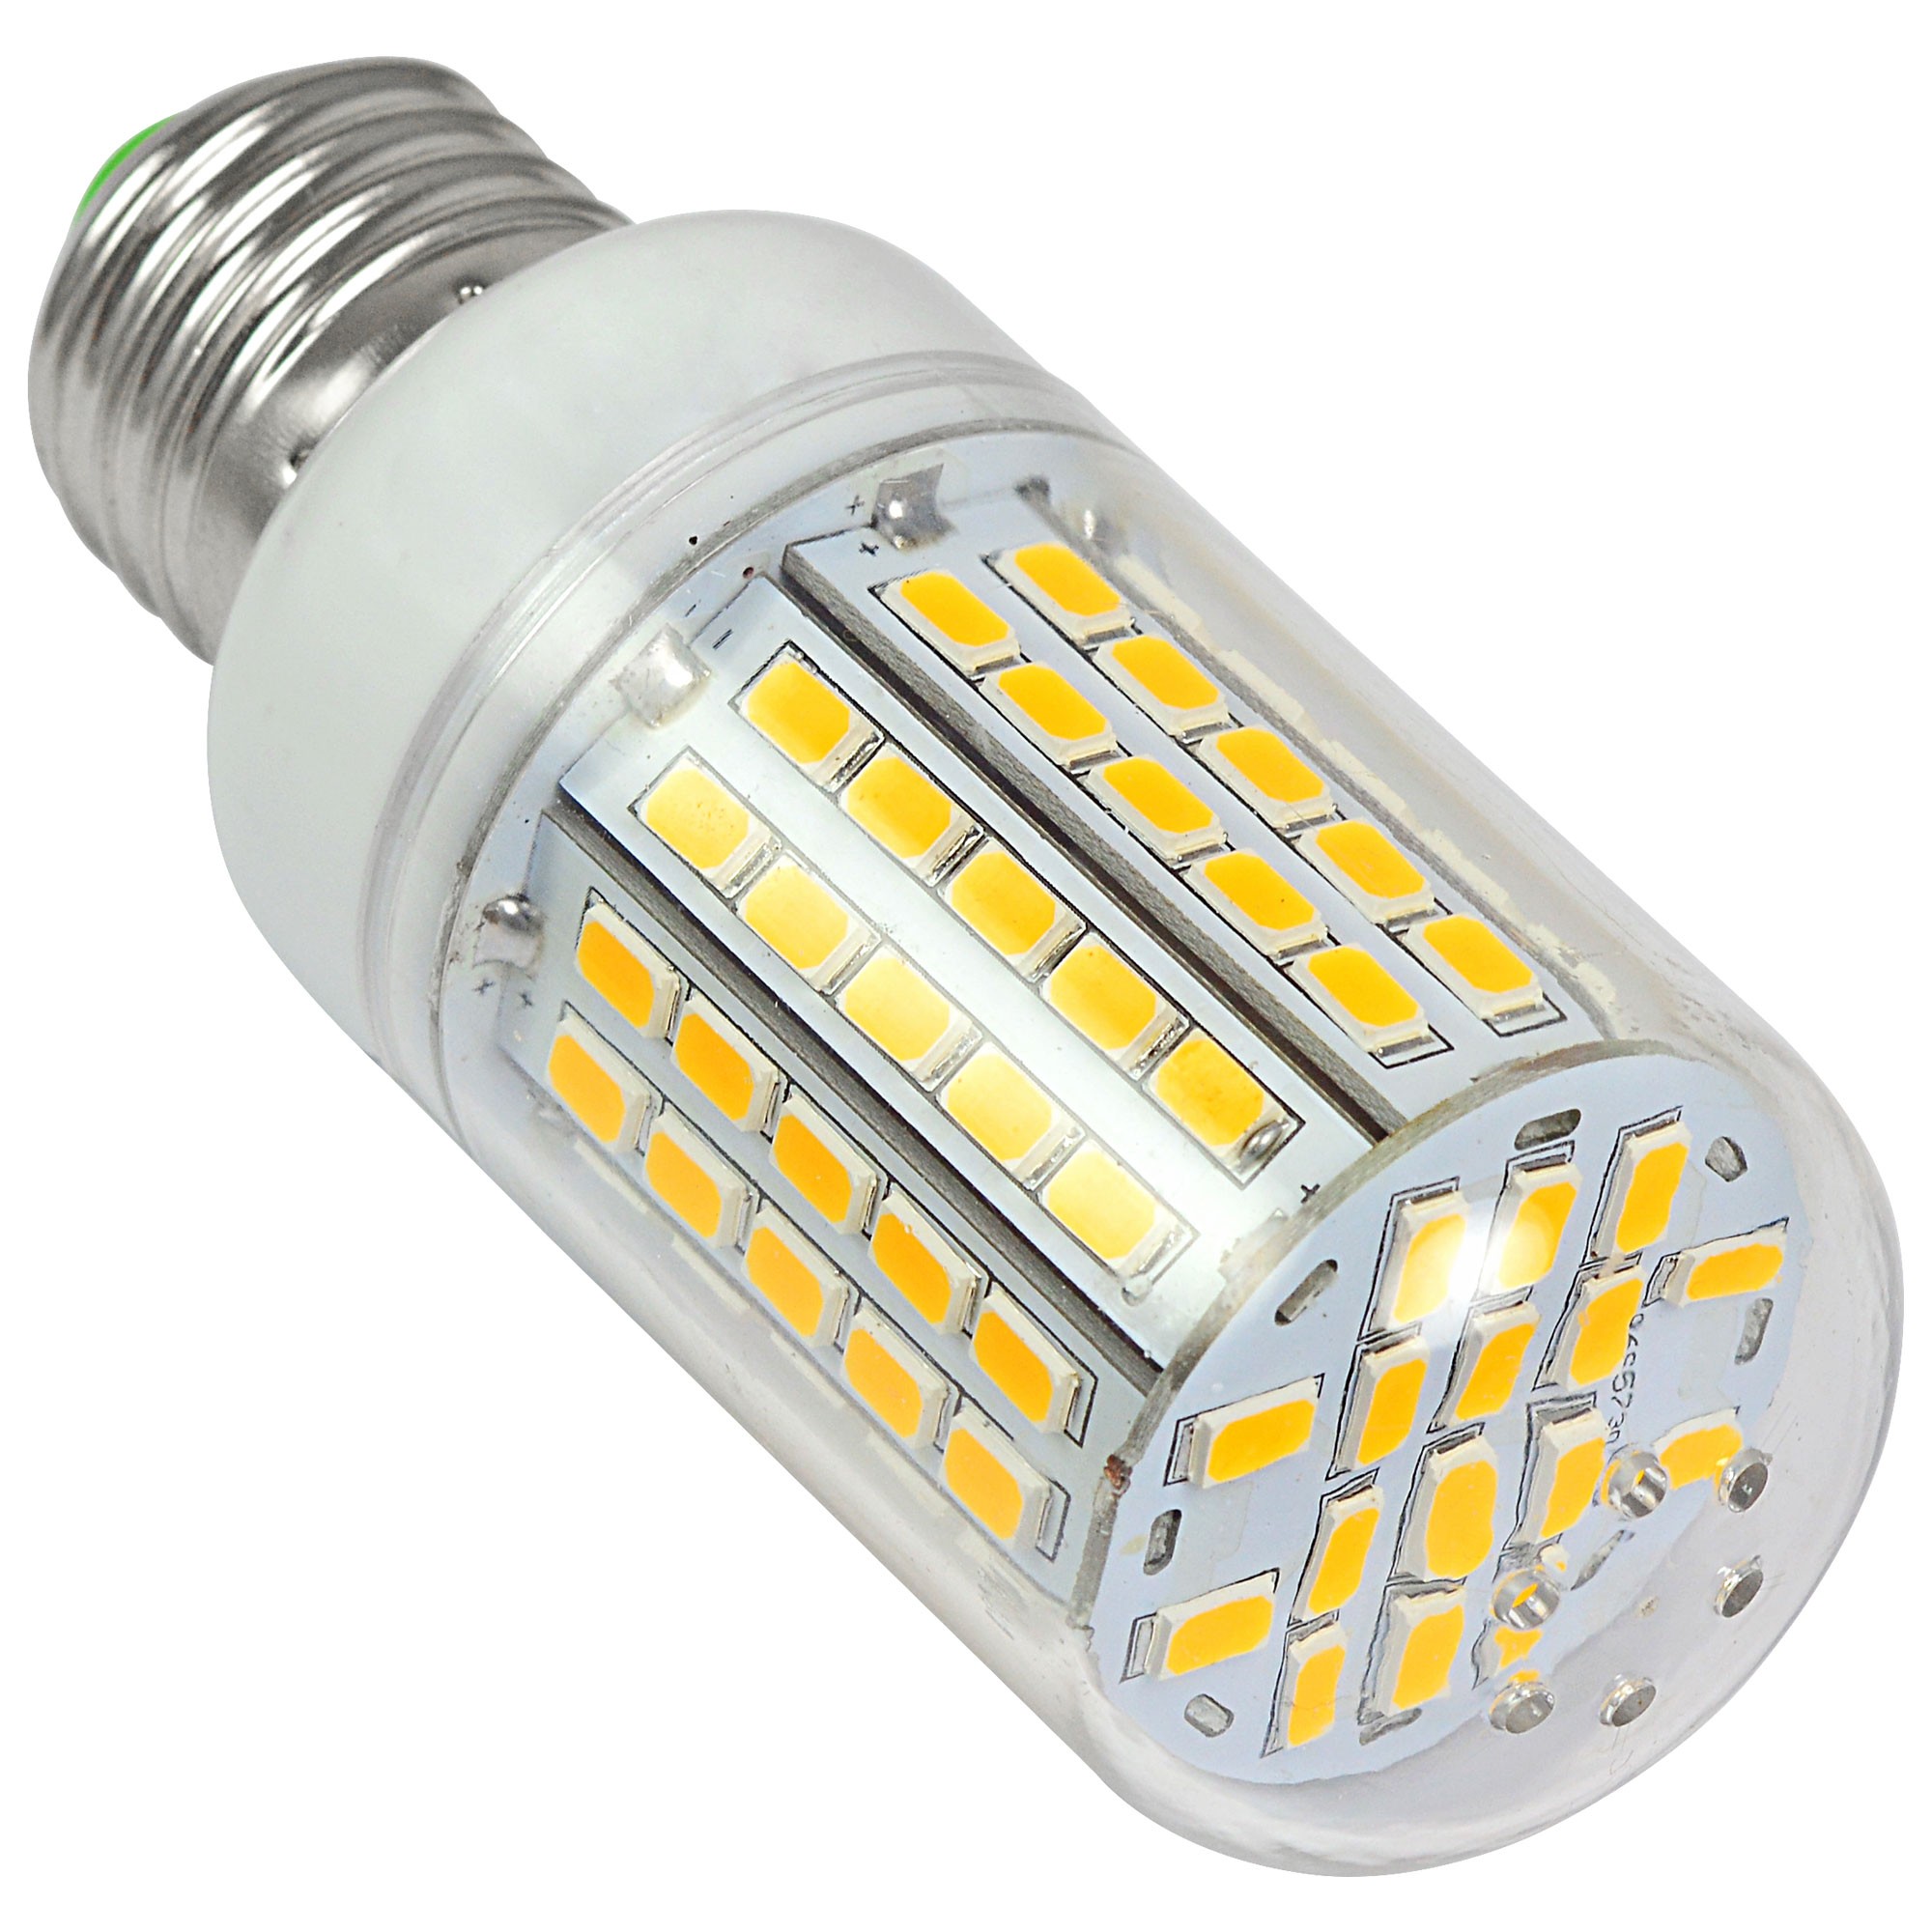 SMD LED lights: Energy Saving LEDs With Better Brightness